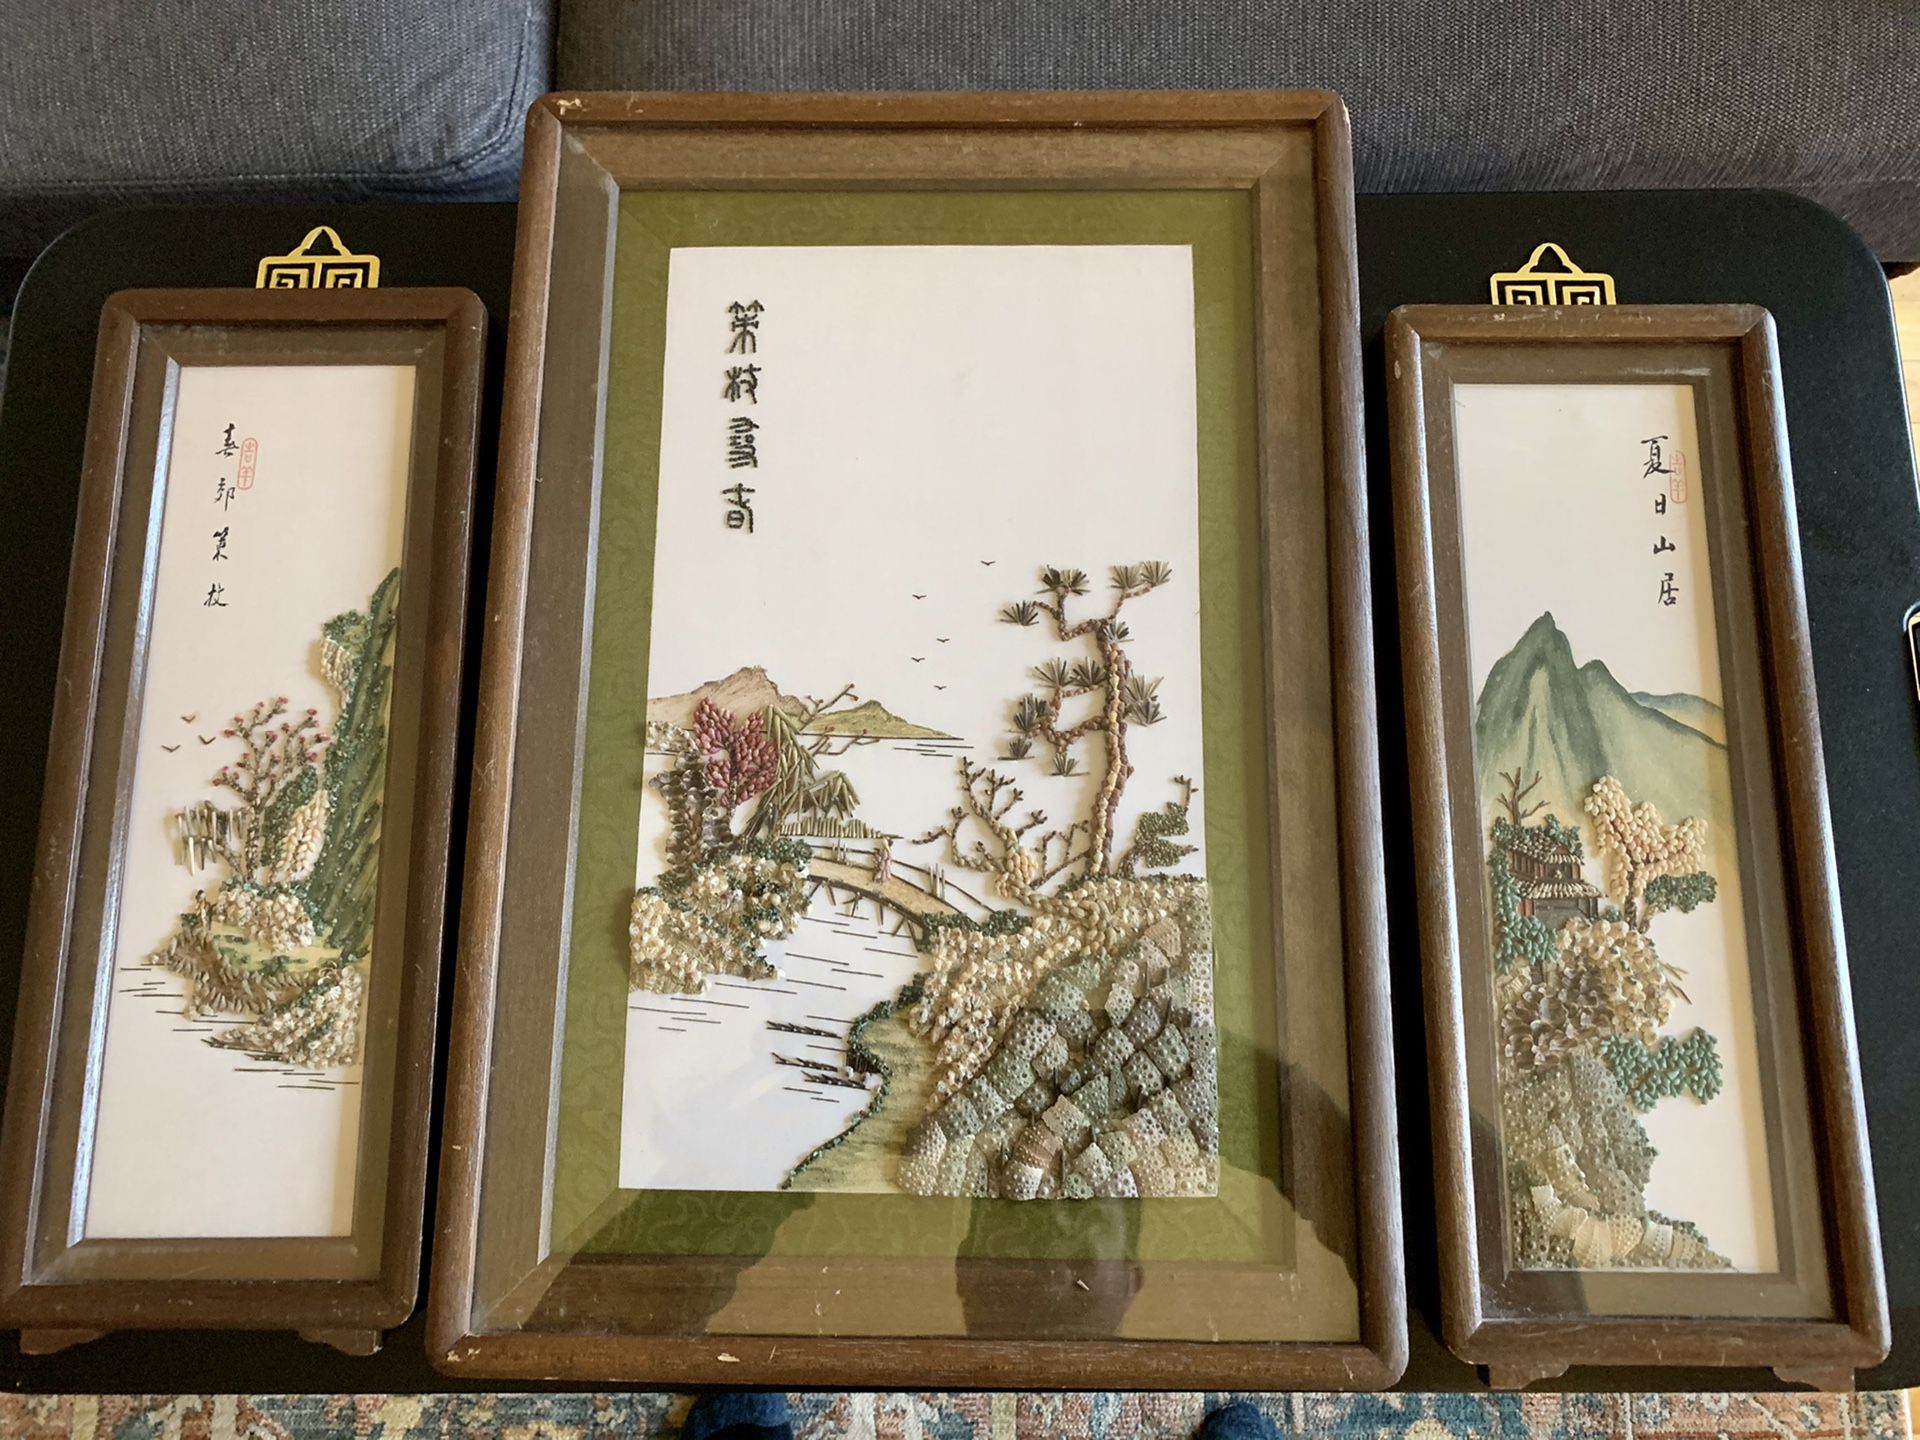 Vintage Asian art (set of 3 prints)